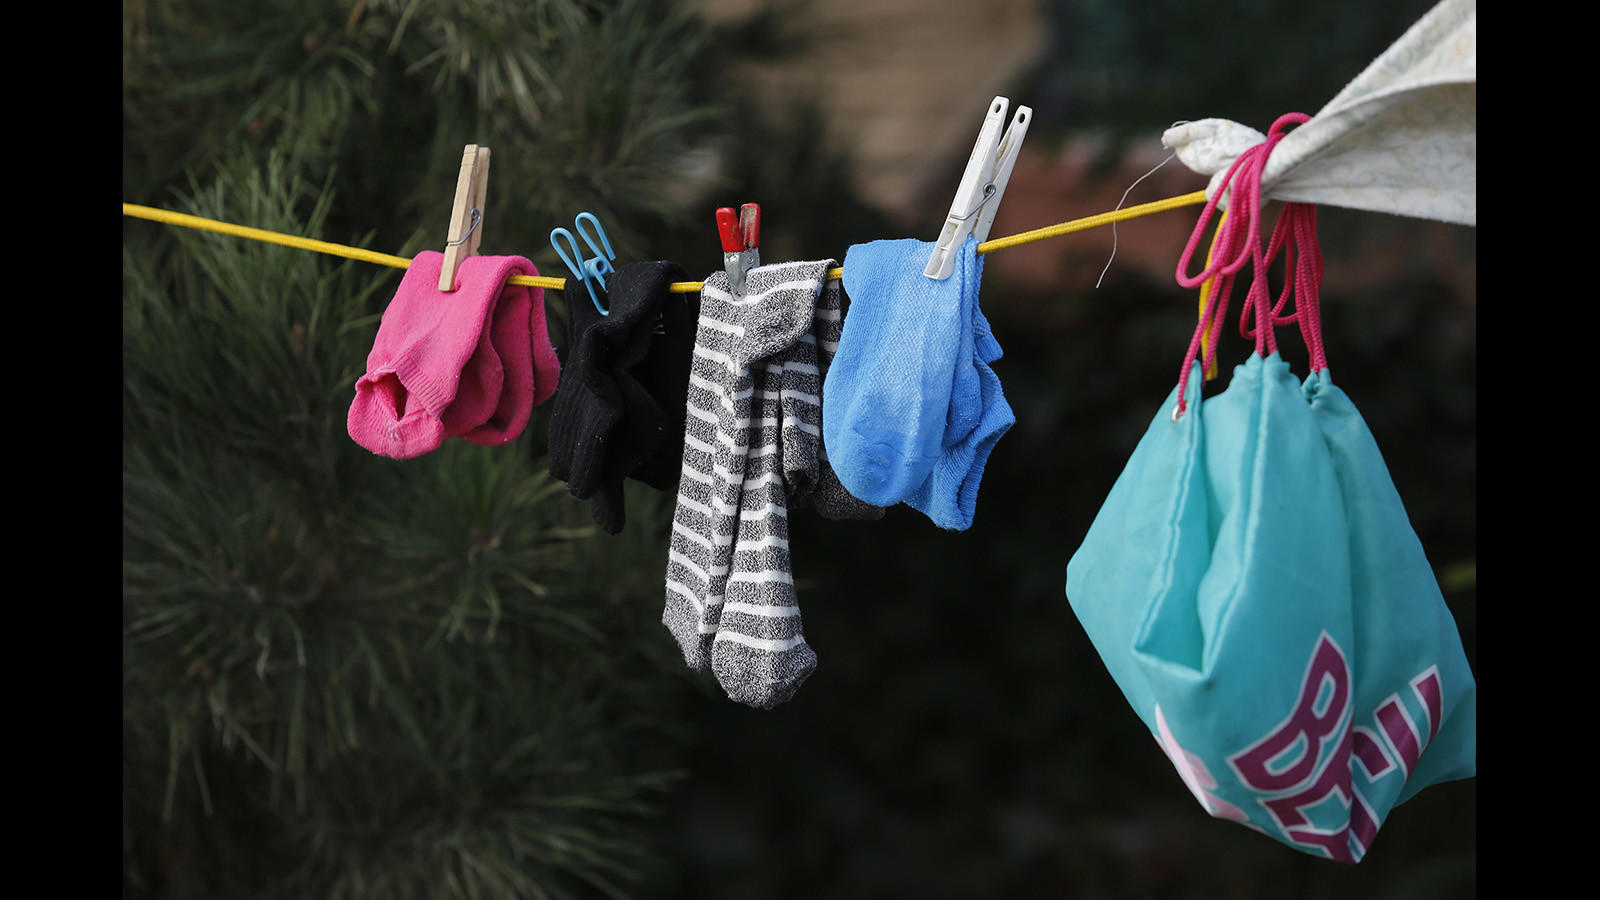 Socks are hung to dry outside Lisa Weber's camp along the Santa Ana River.